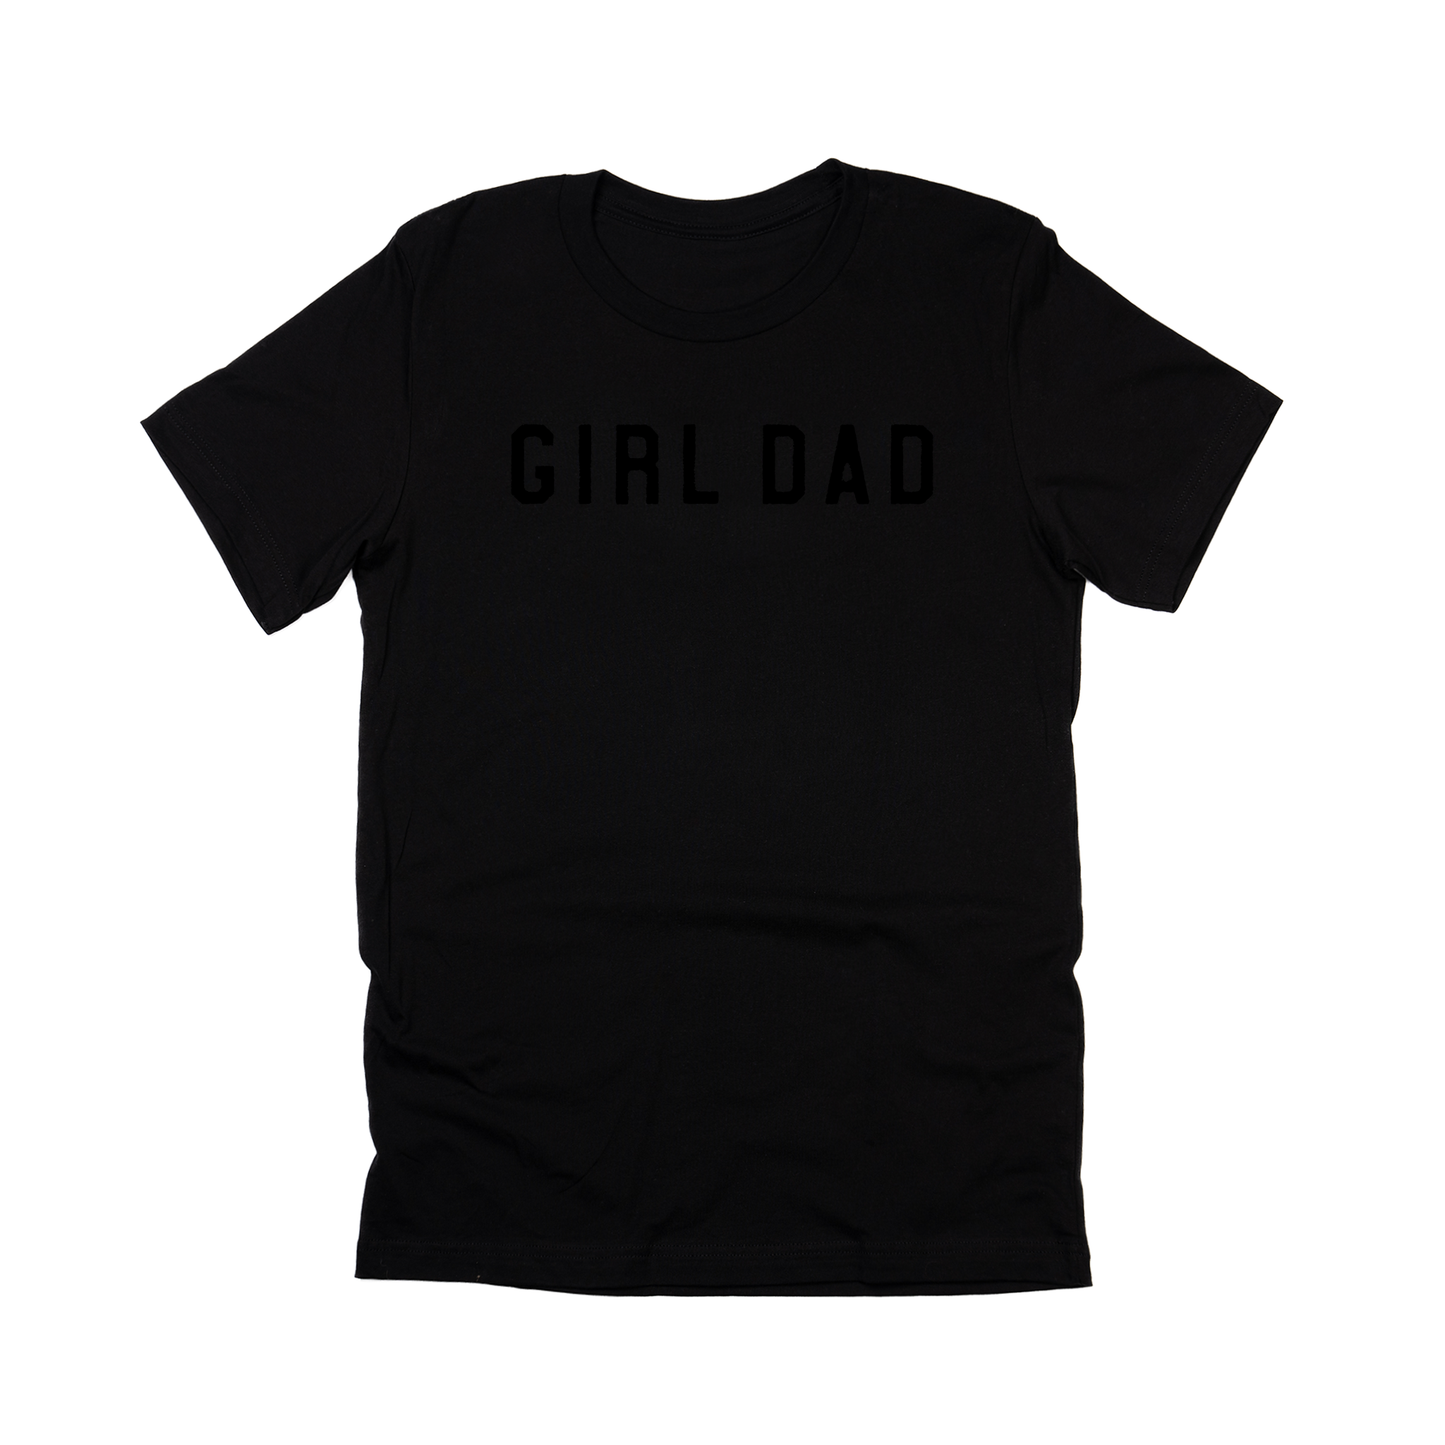 Girl Dad® (Across Front, Black) - Tee (Black)